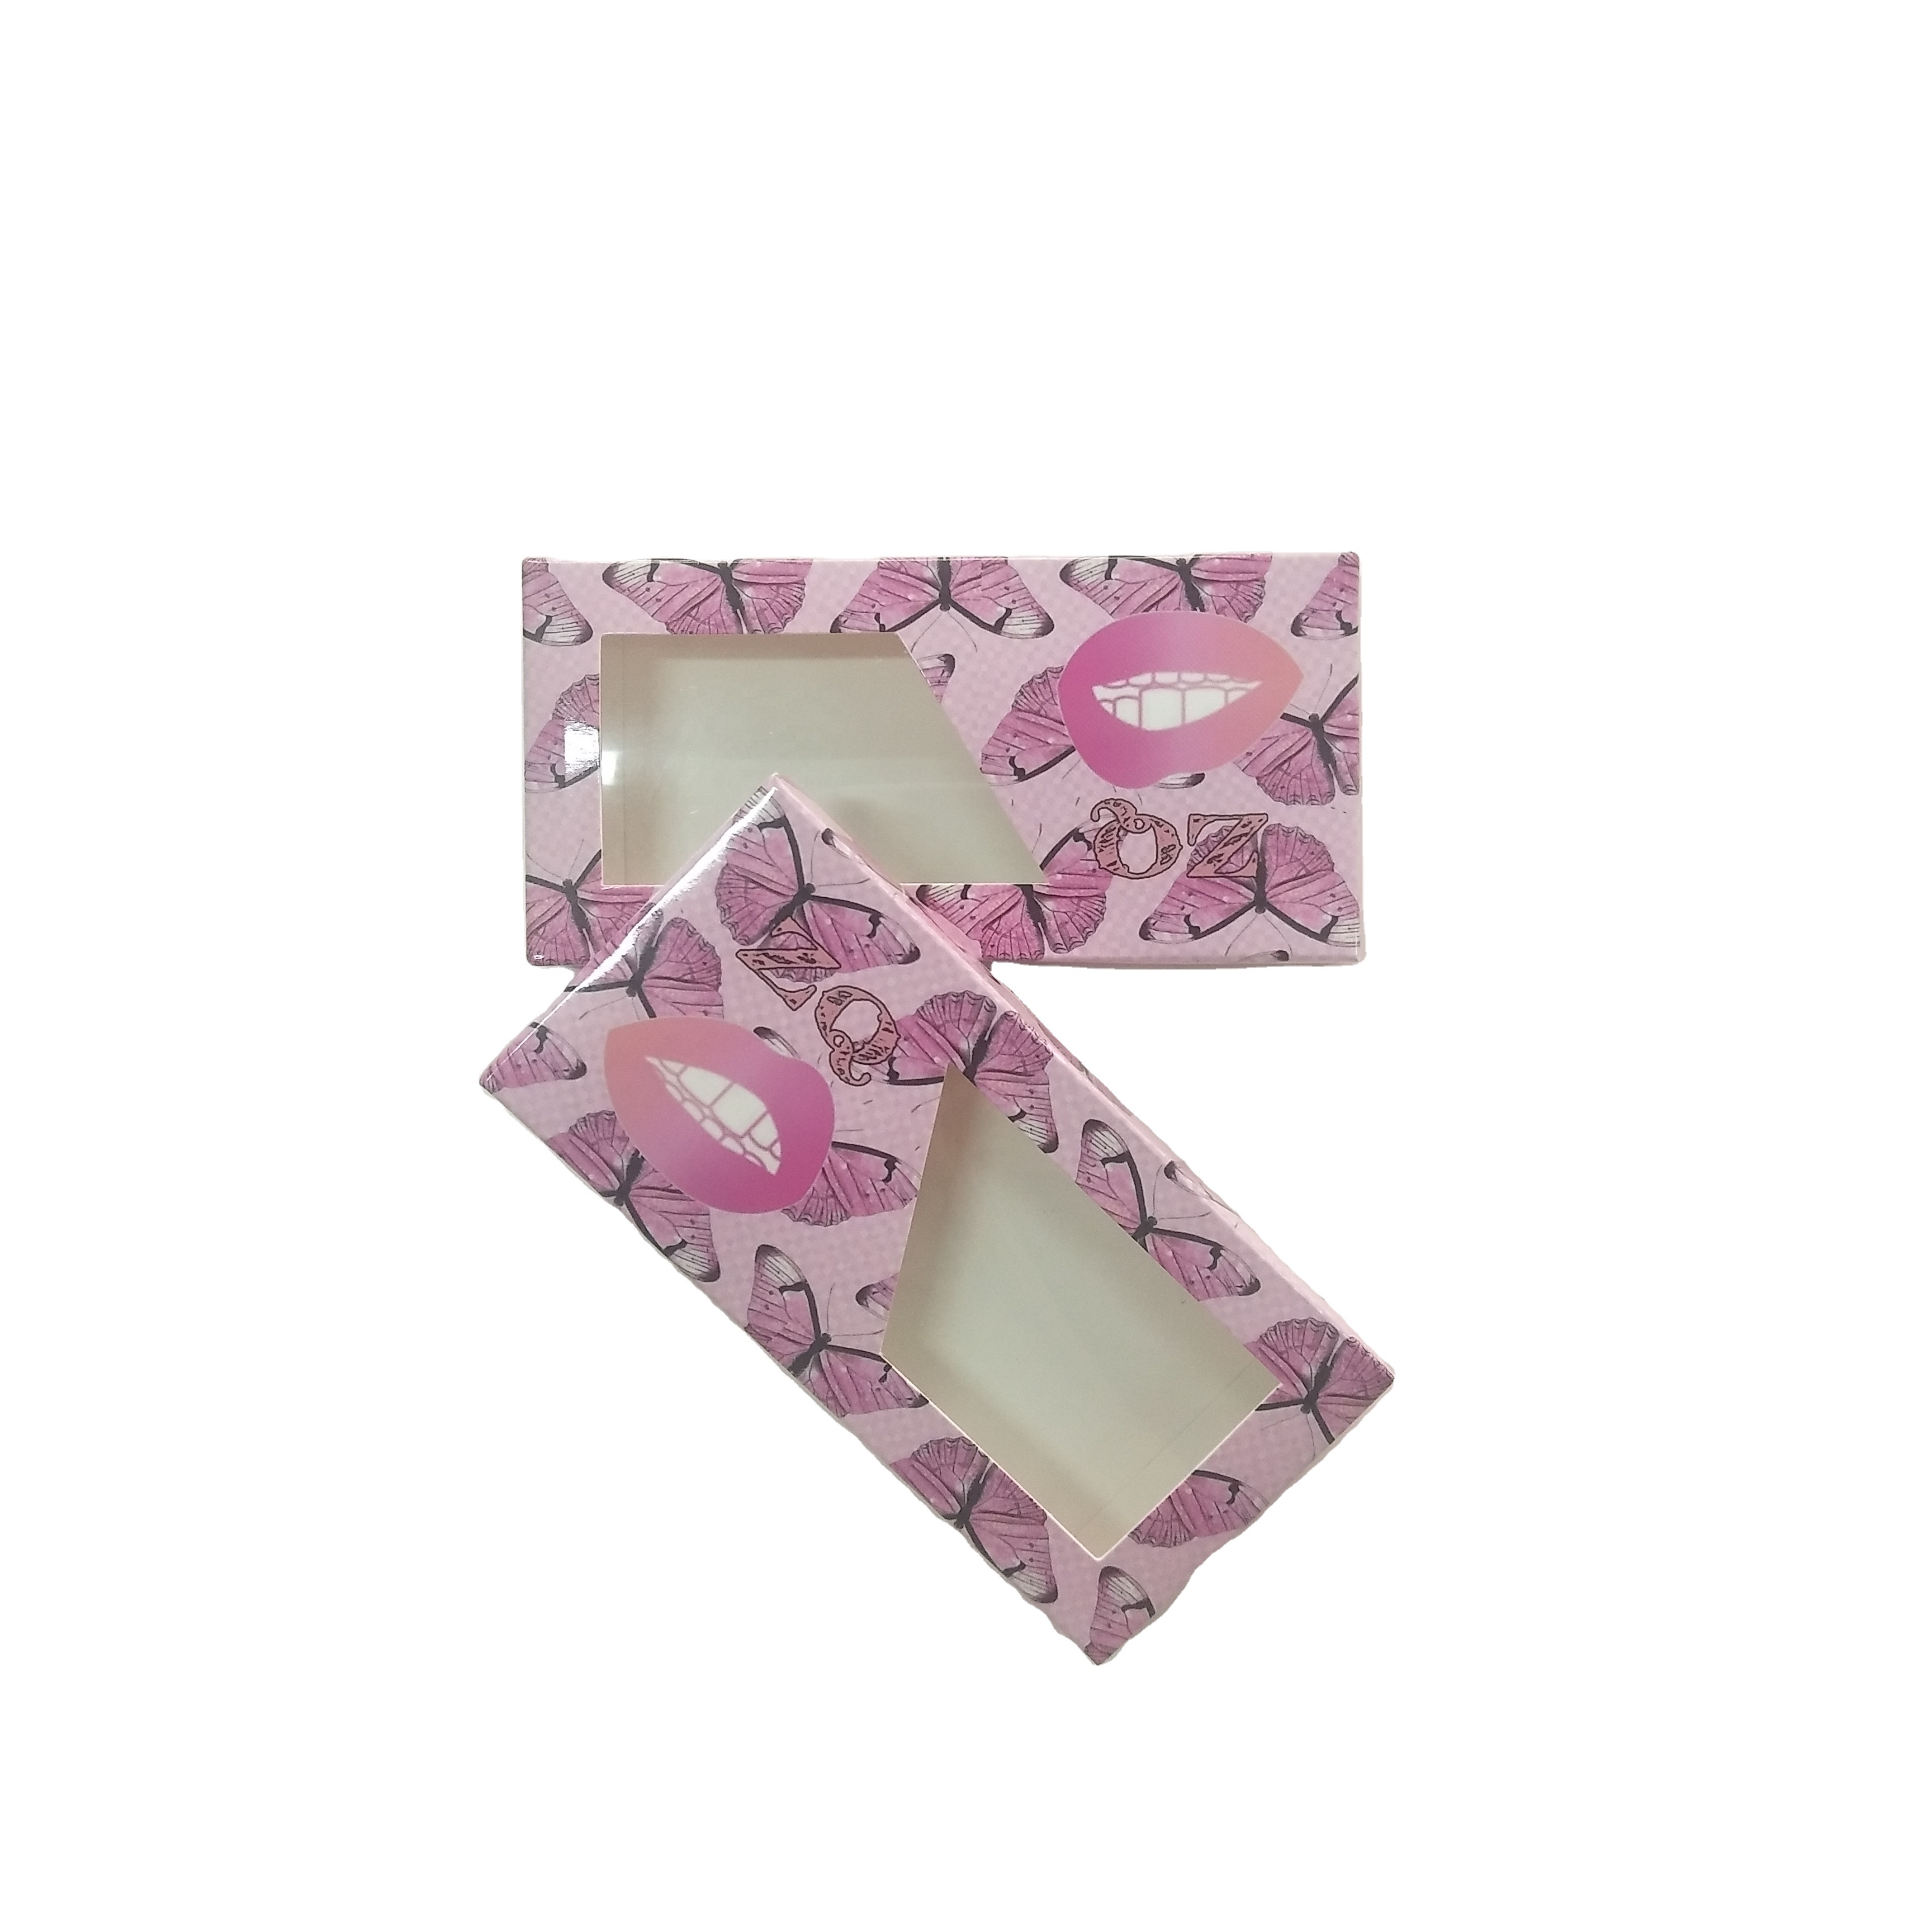 2021 prevalent pink special shape window paper beauty false eyelash paper box packaging